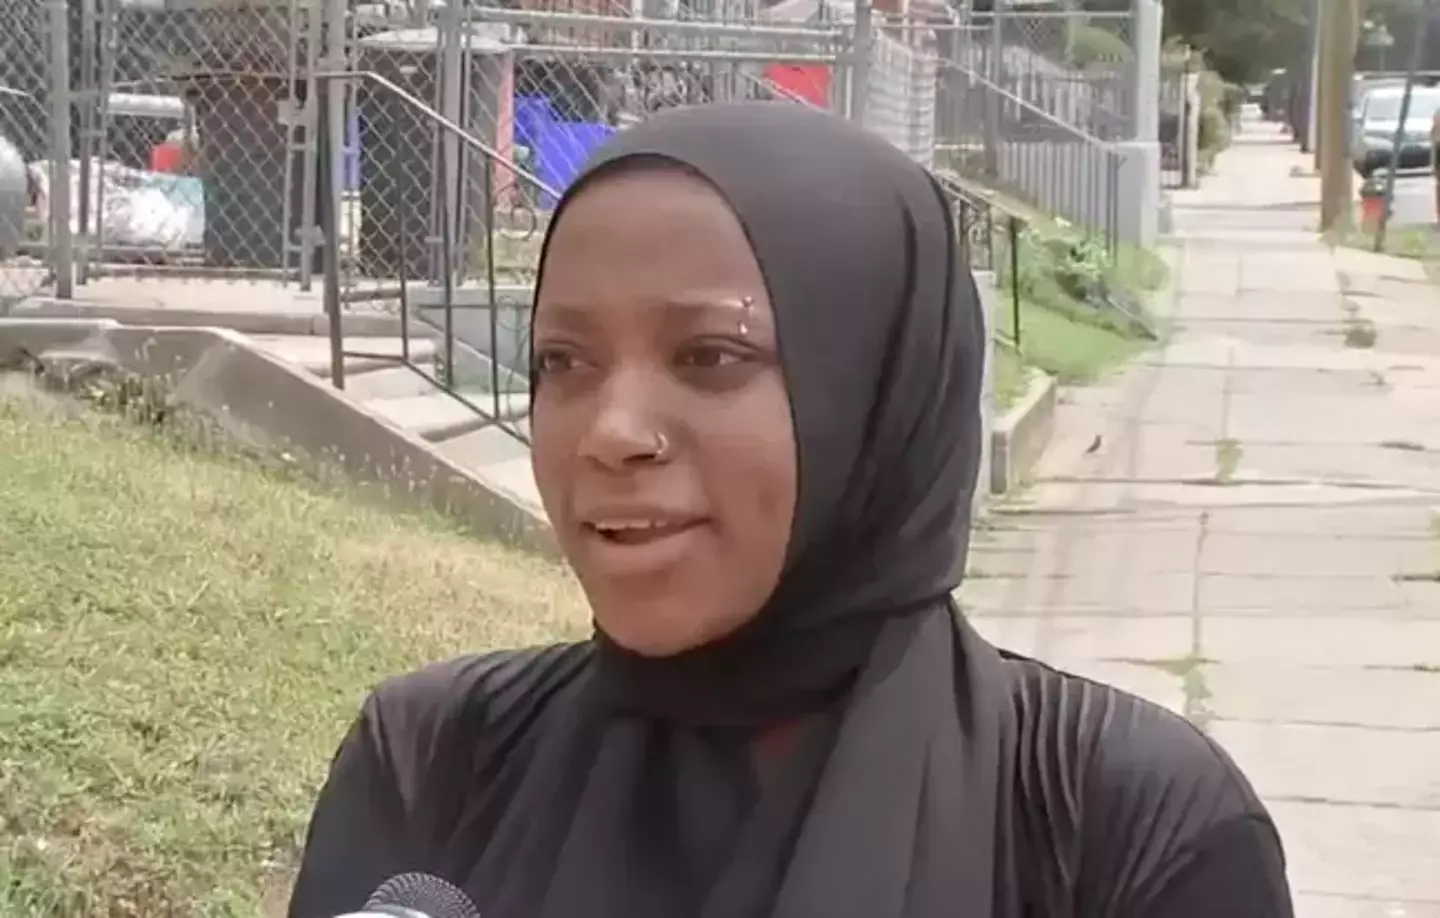 Hafsah Abdur-Rahman said she felt like her principal 'stole' the moment from her.